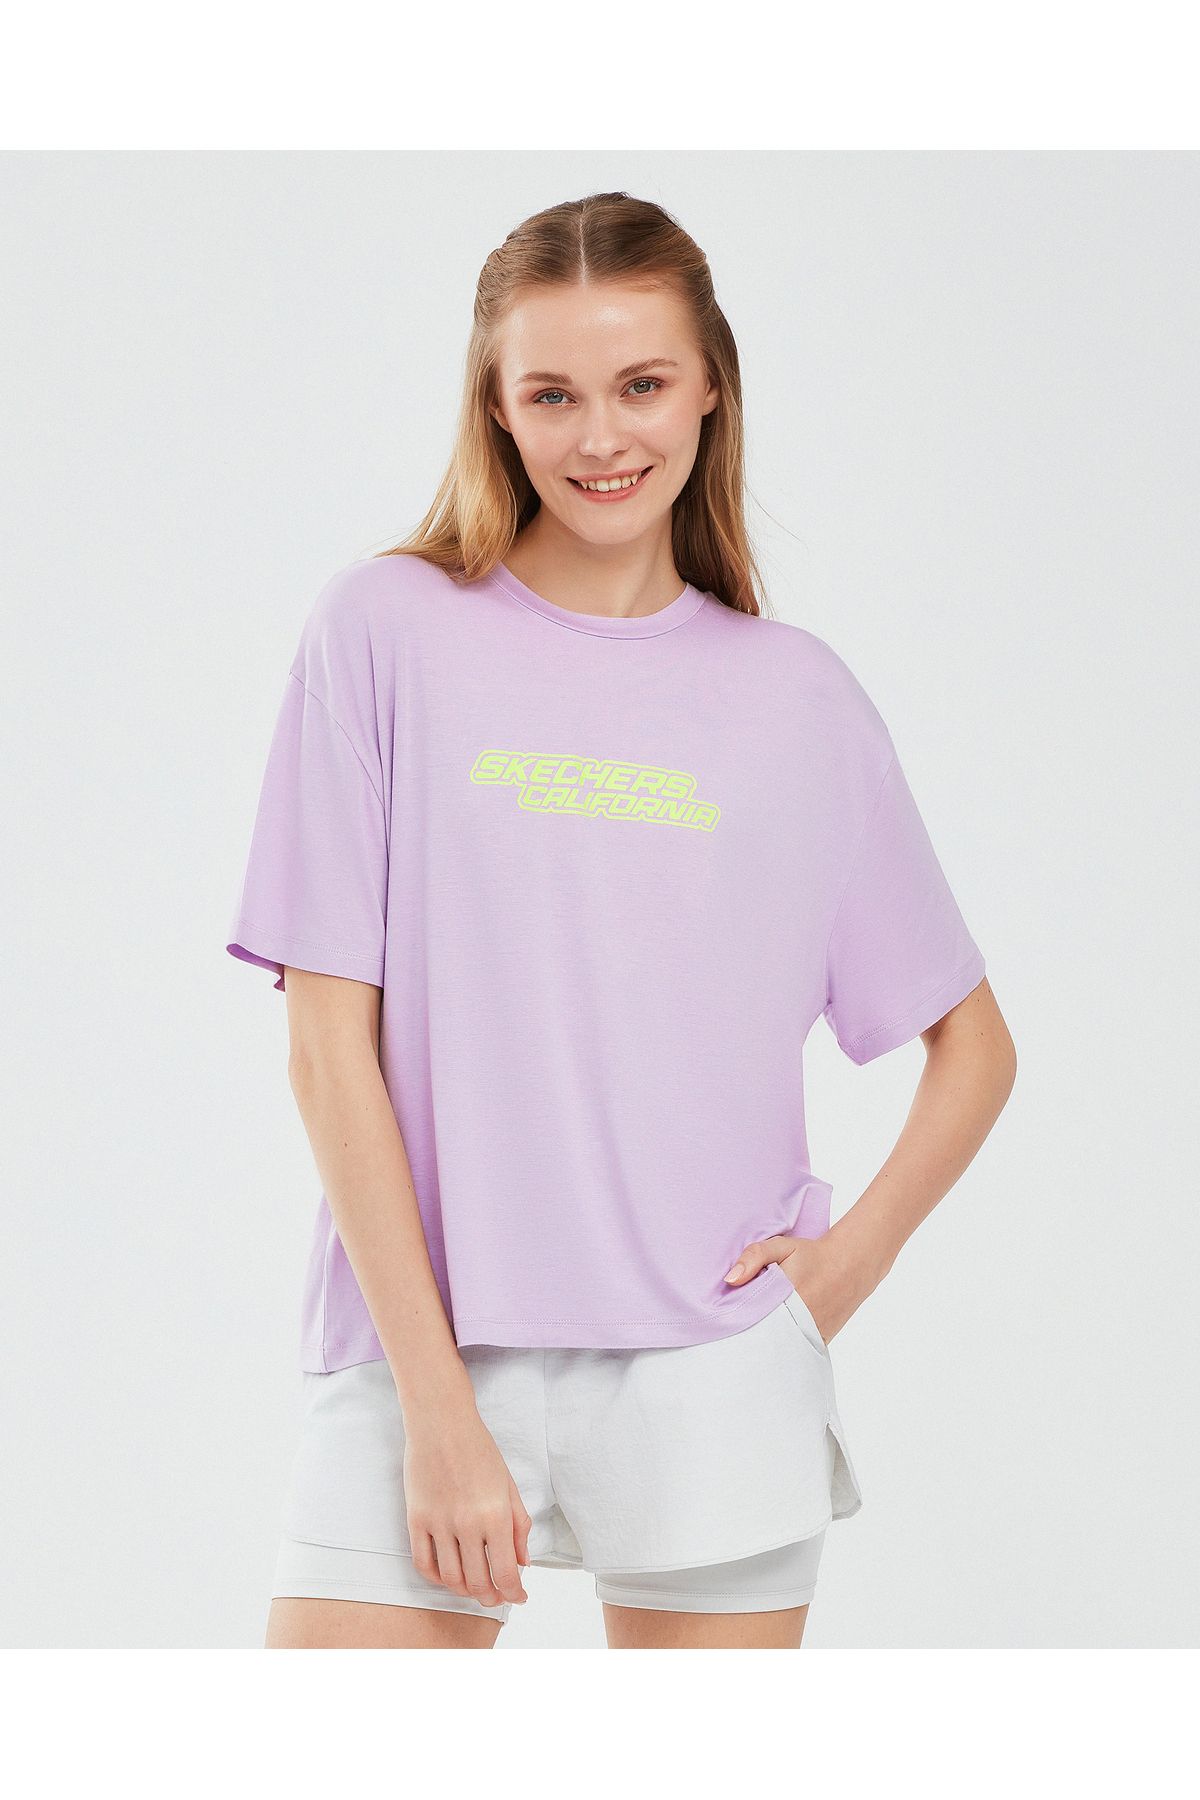 Skechers Graphic T-shirt W Short Sleeve Kadın Lila Tshirt S241102-505